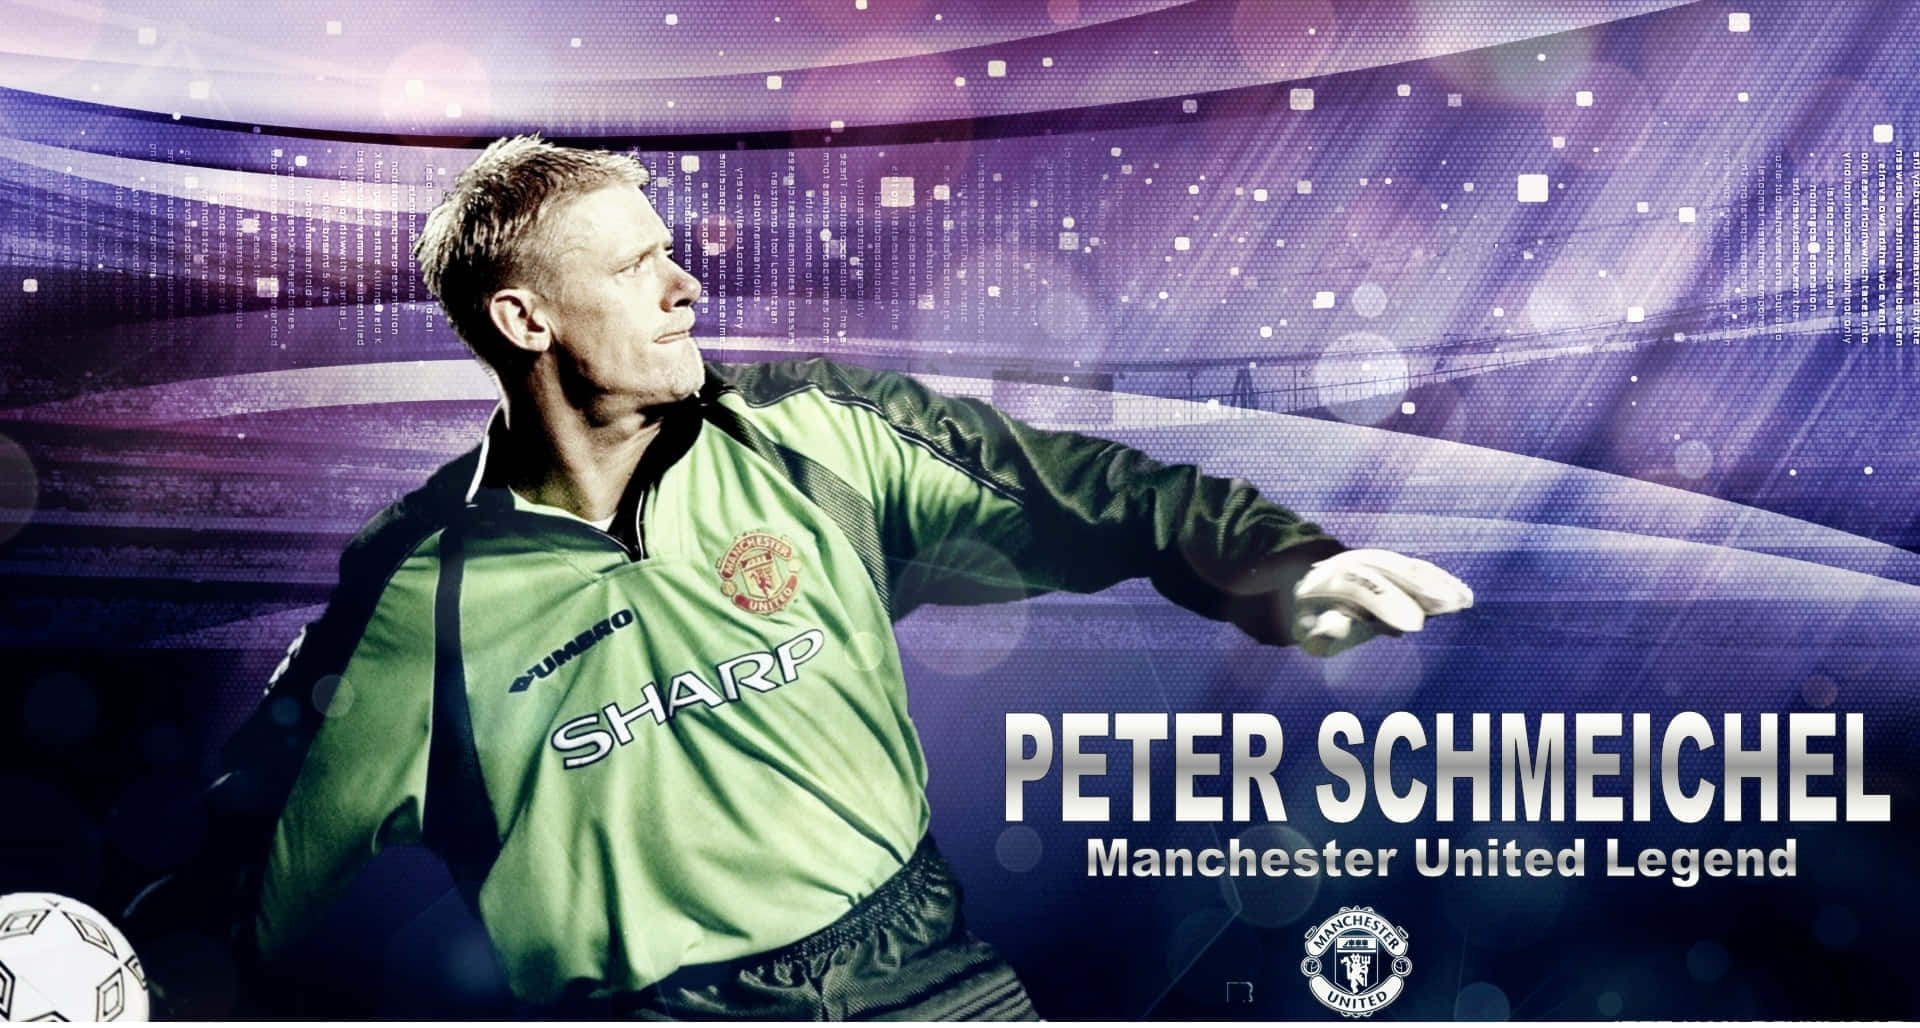 Peterschmeichel Manchester United Legenden-poster Wallpaper